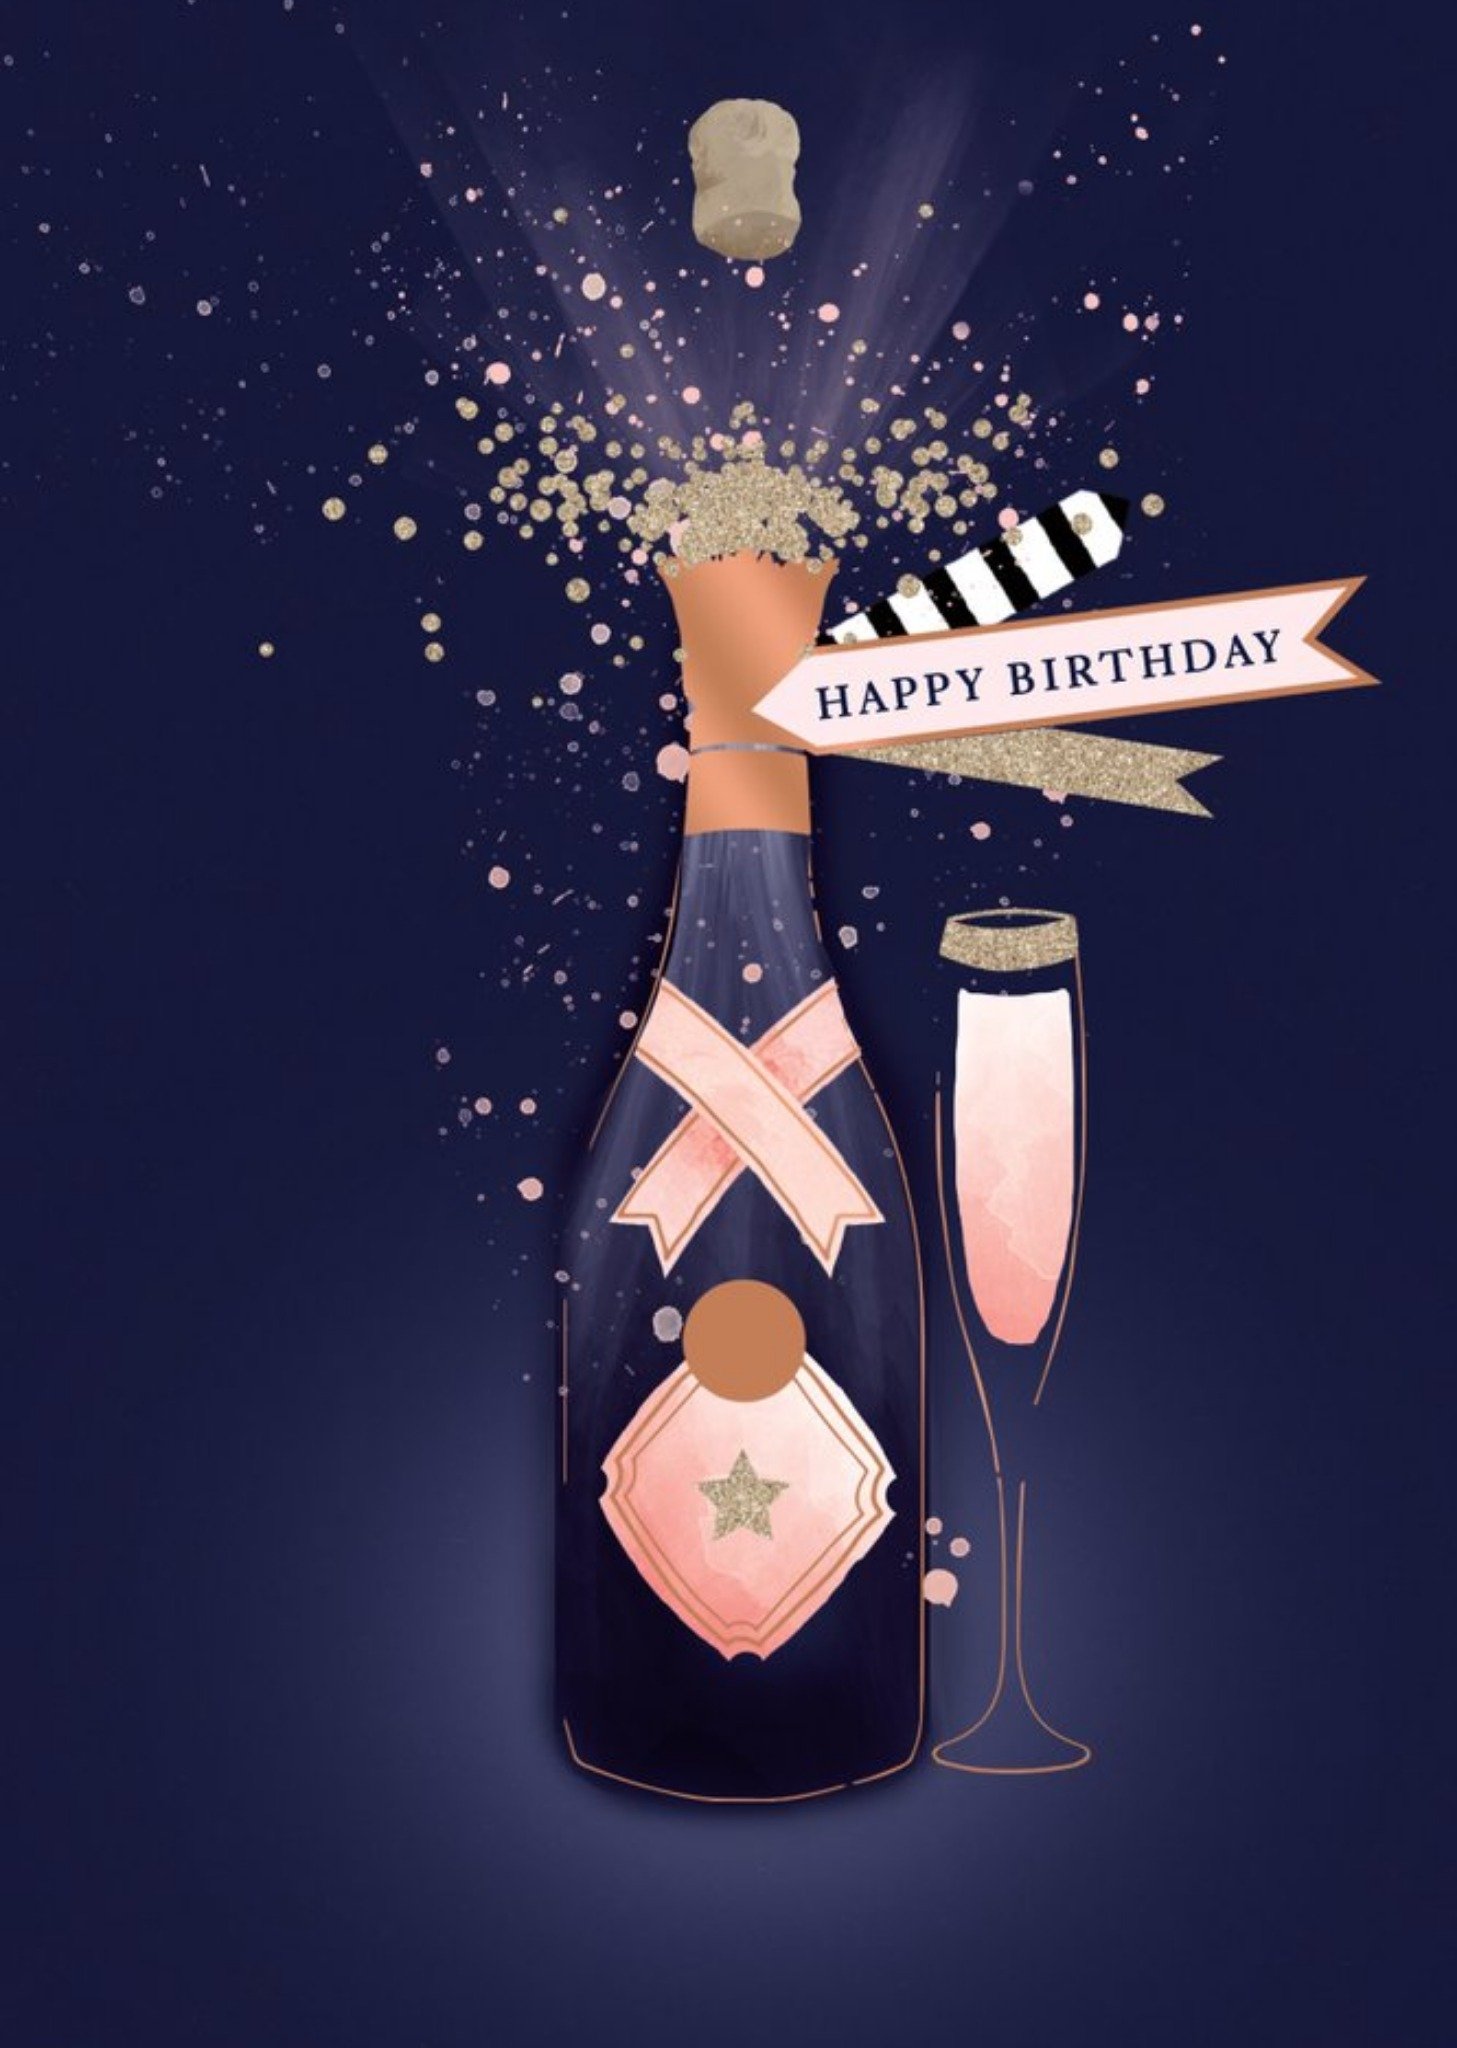 Friends Ukg Glass Celebrate Champagne Birthday Card Ecard